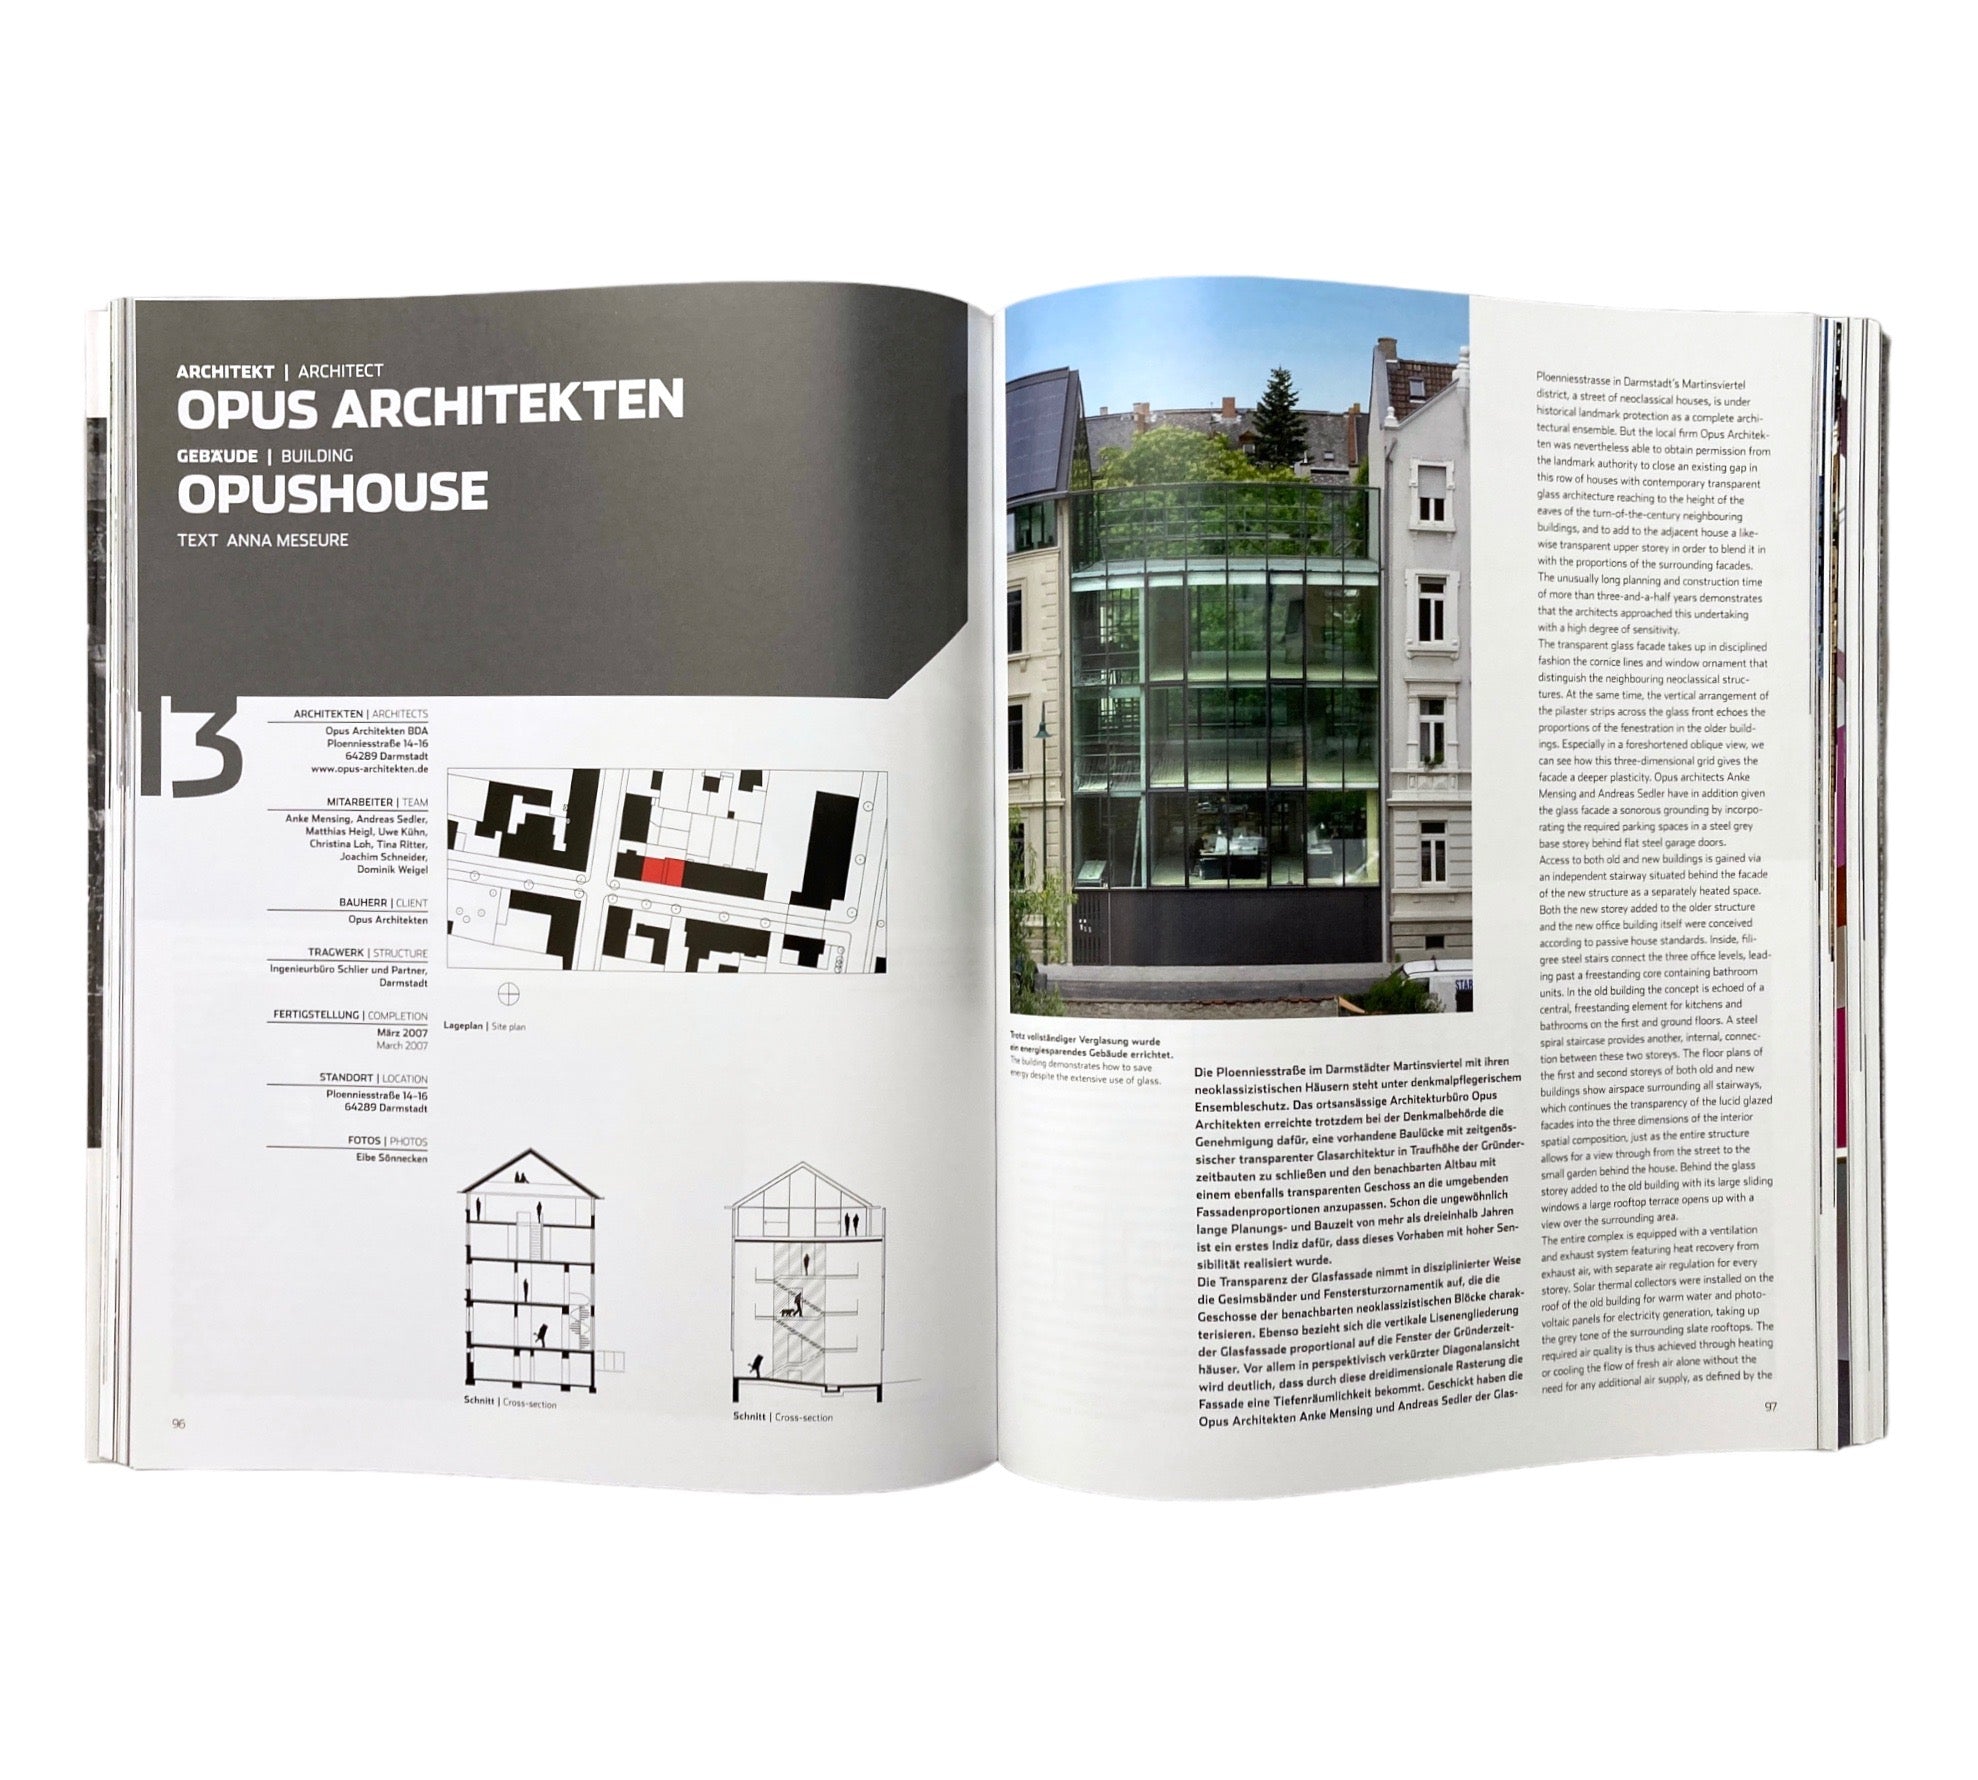 DAM German Architecture Annual: 2008/09